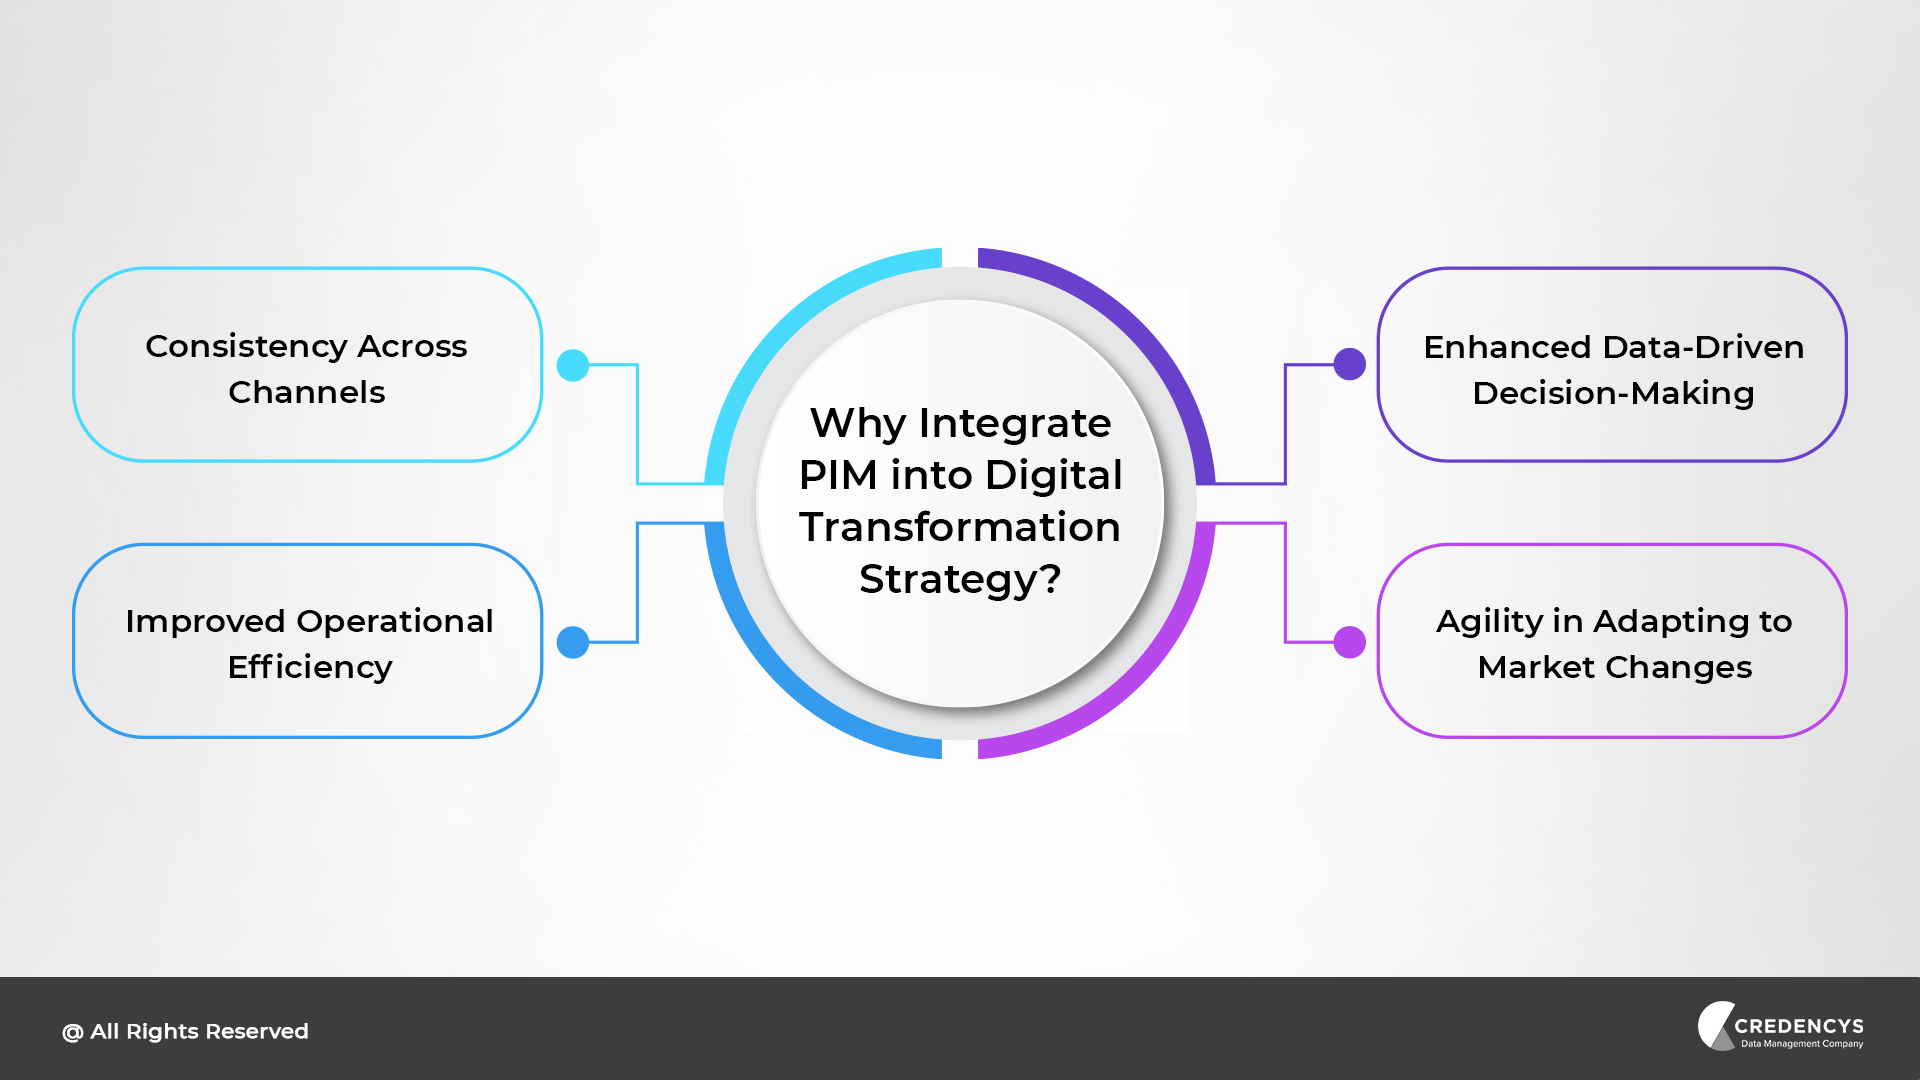 Integrating PIM into Digital Transformation Strategy